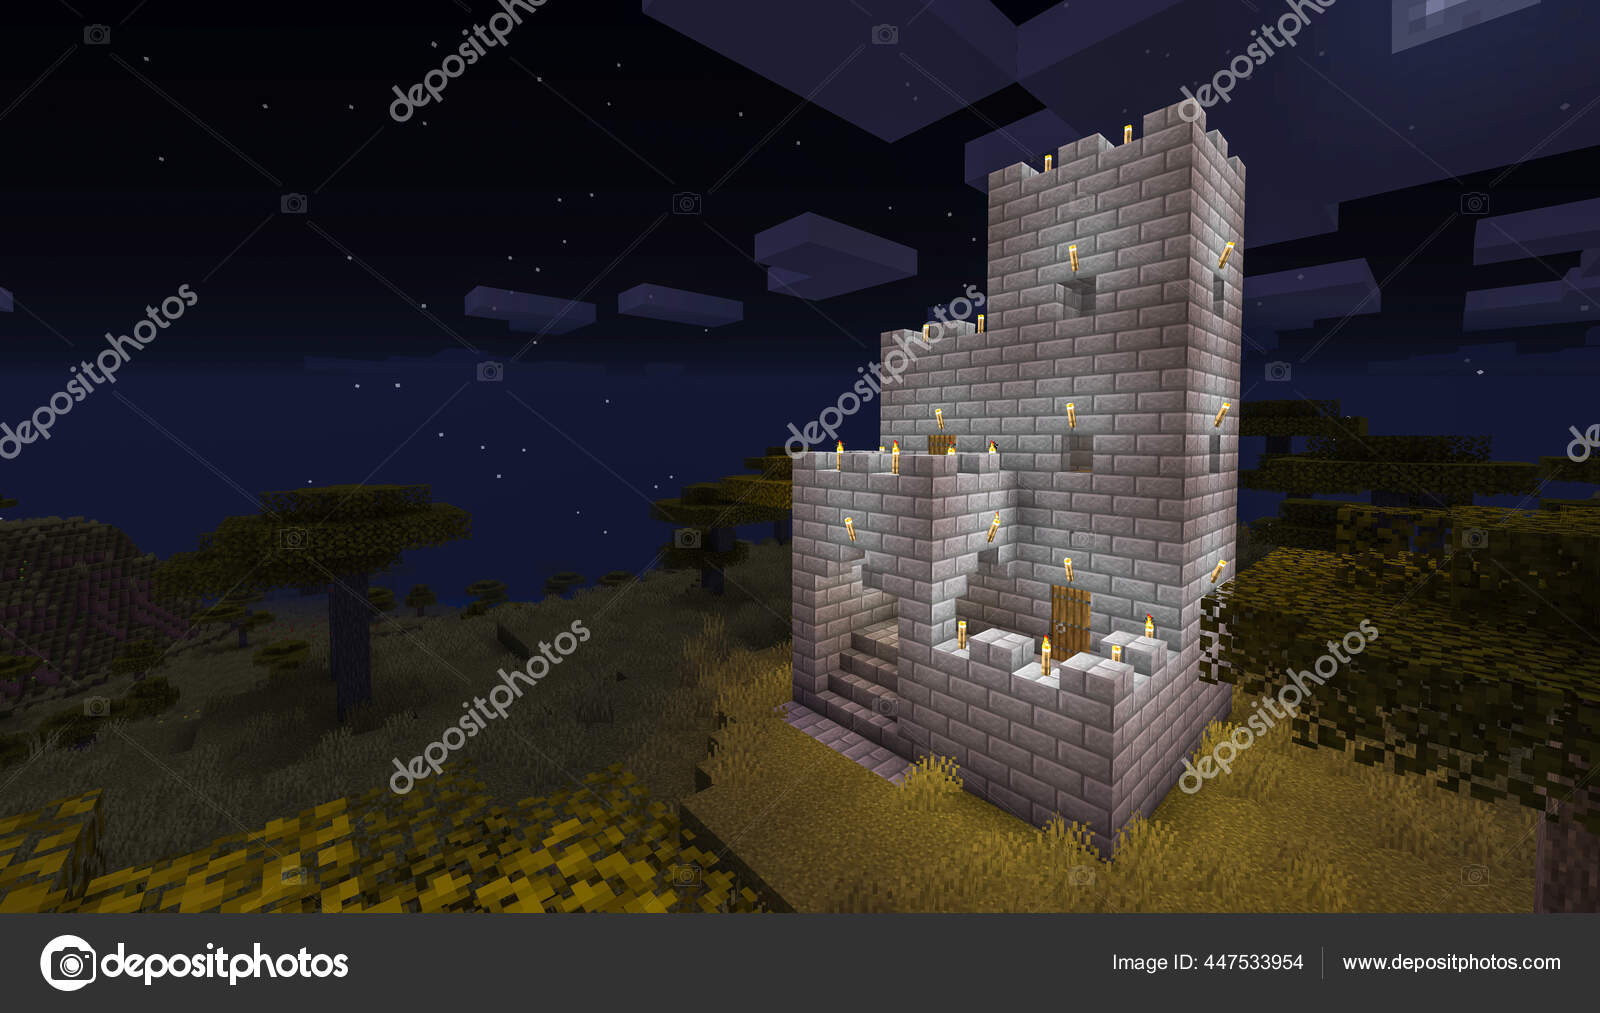 Minecraft Game February 2021 Sample Simply Stone Medieval Castle Minecraft  – Stock Editorial Photo © Yuriy_Vlasenko #447533954